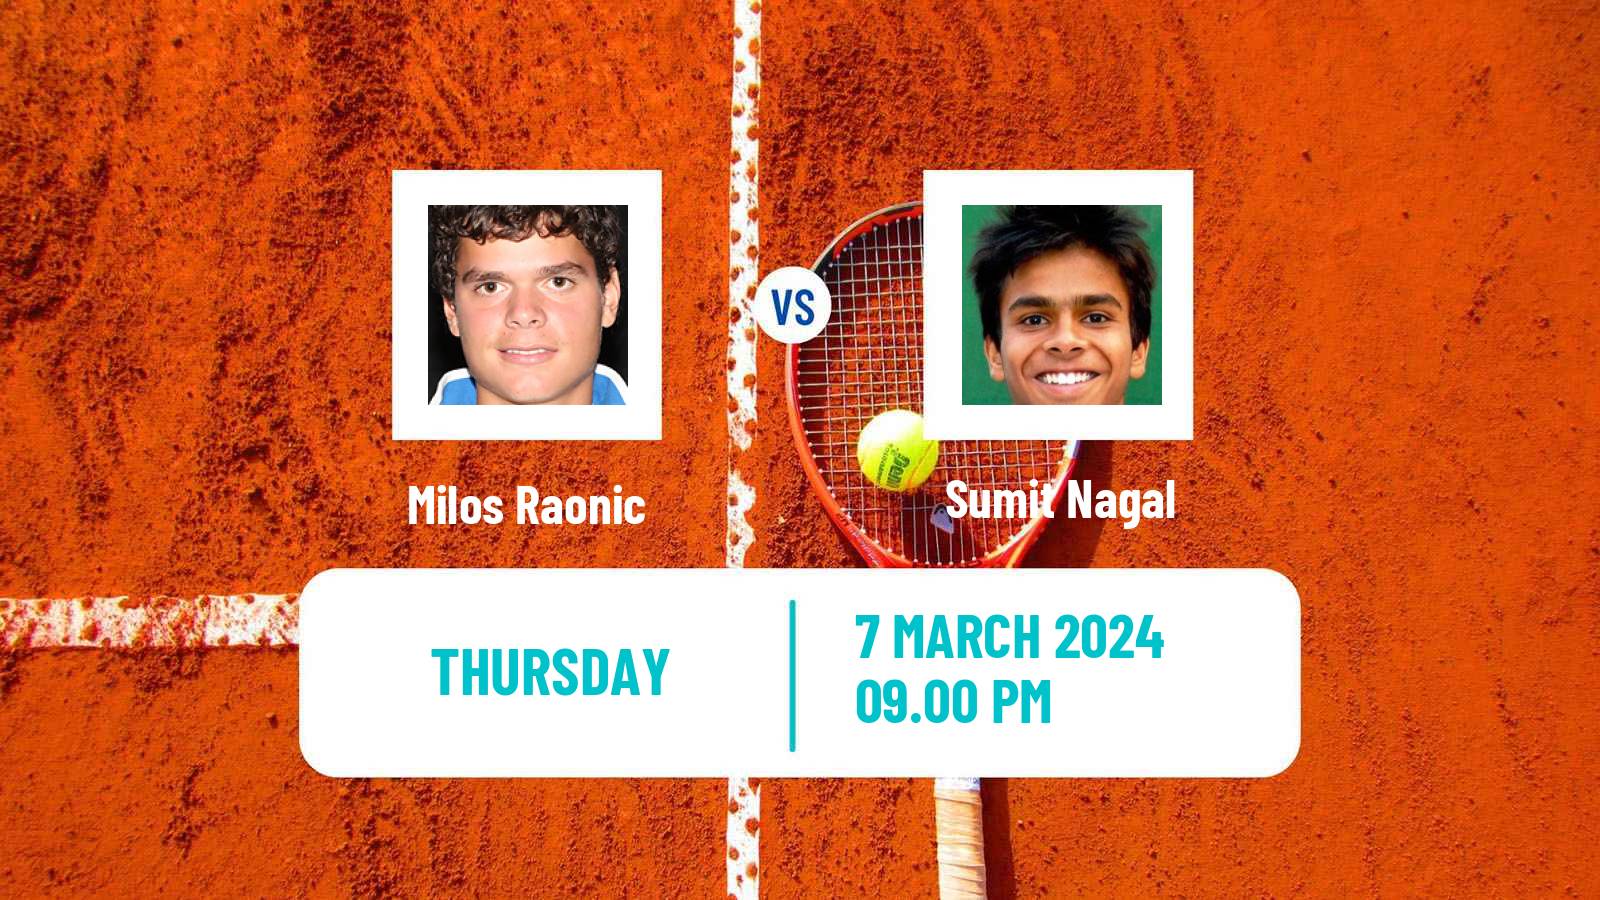 Tennis ATP Indian Wells Milos Raonic - Sumit Nagal